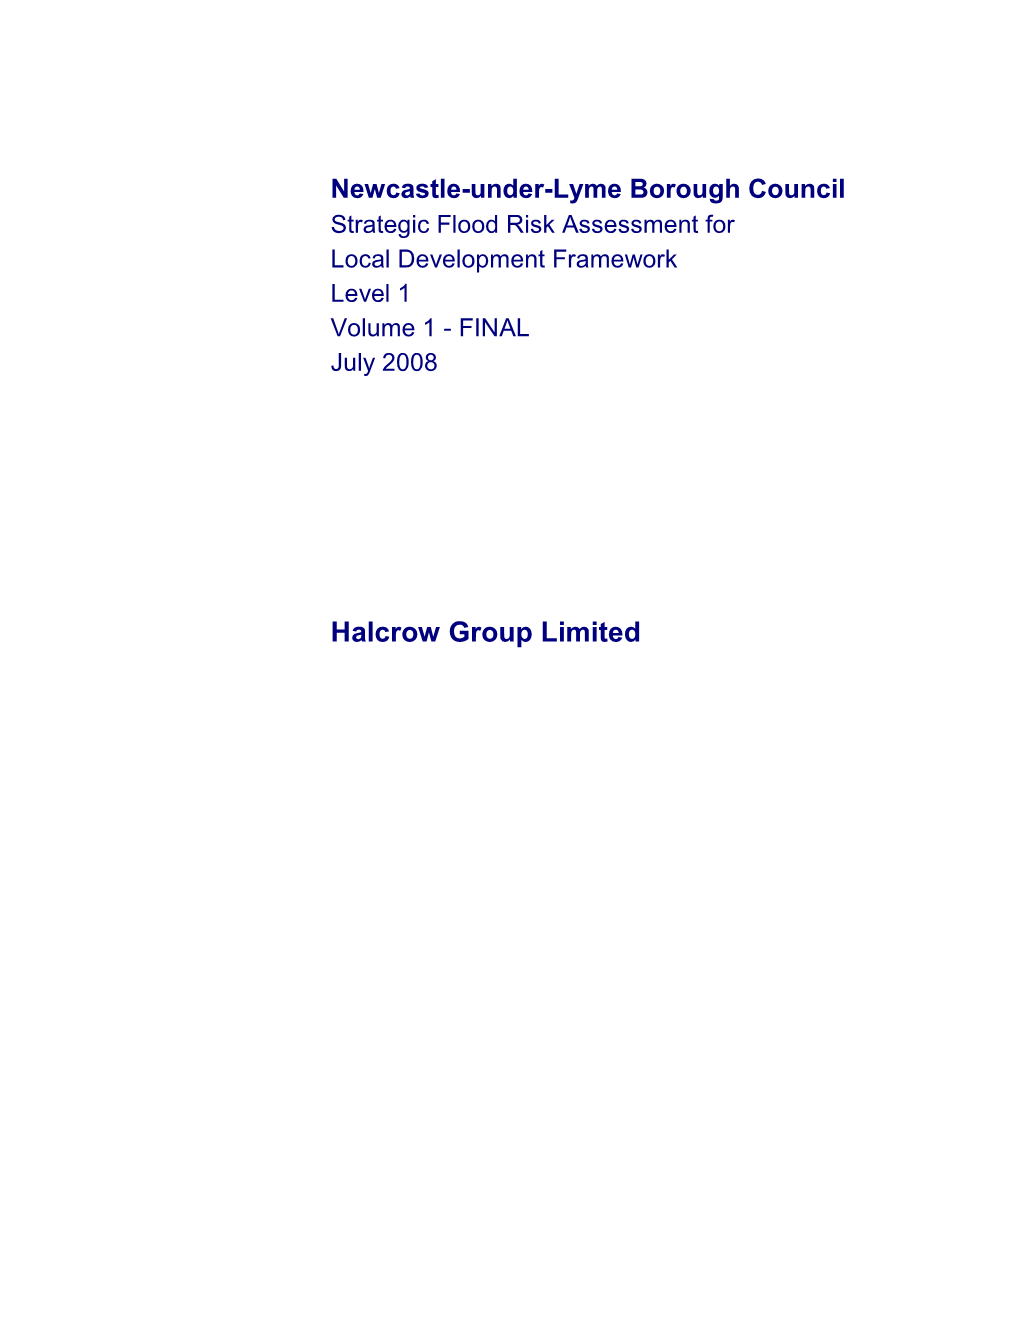 Newcastle-Under-Lyme Borough Council Strategic Flood Risk Assessment for Local Development Framework Level 1 Volume 1 - FINAL July 2008